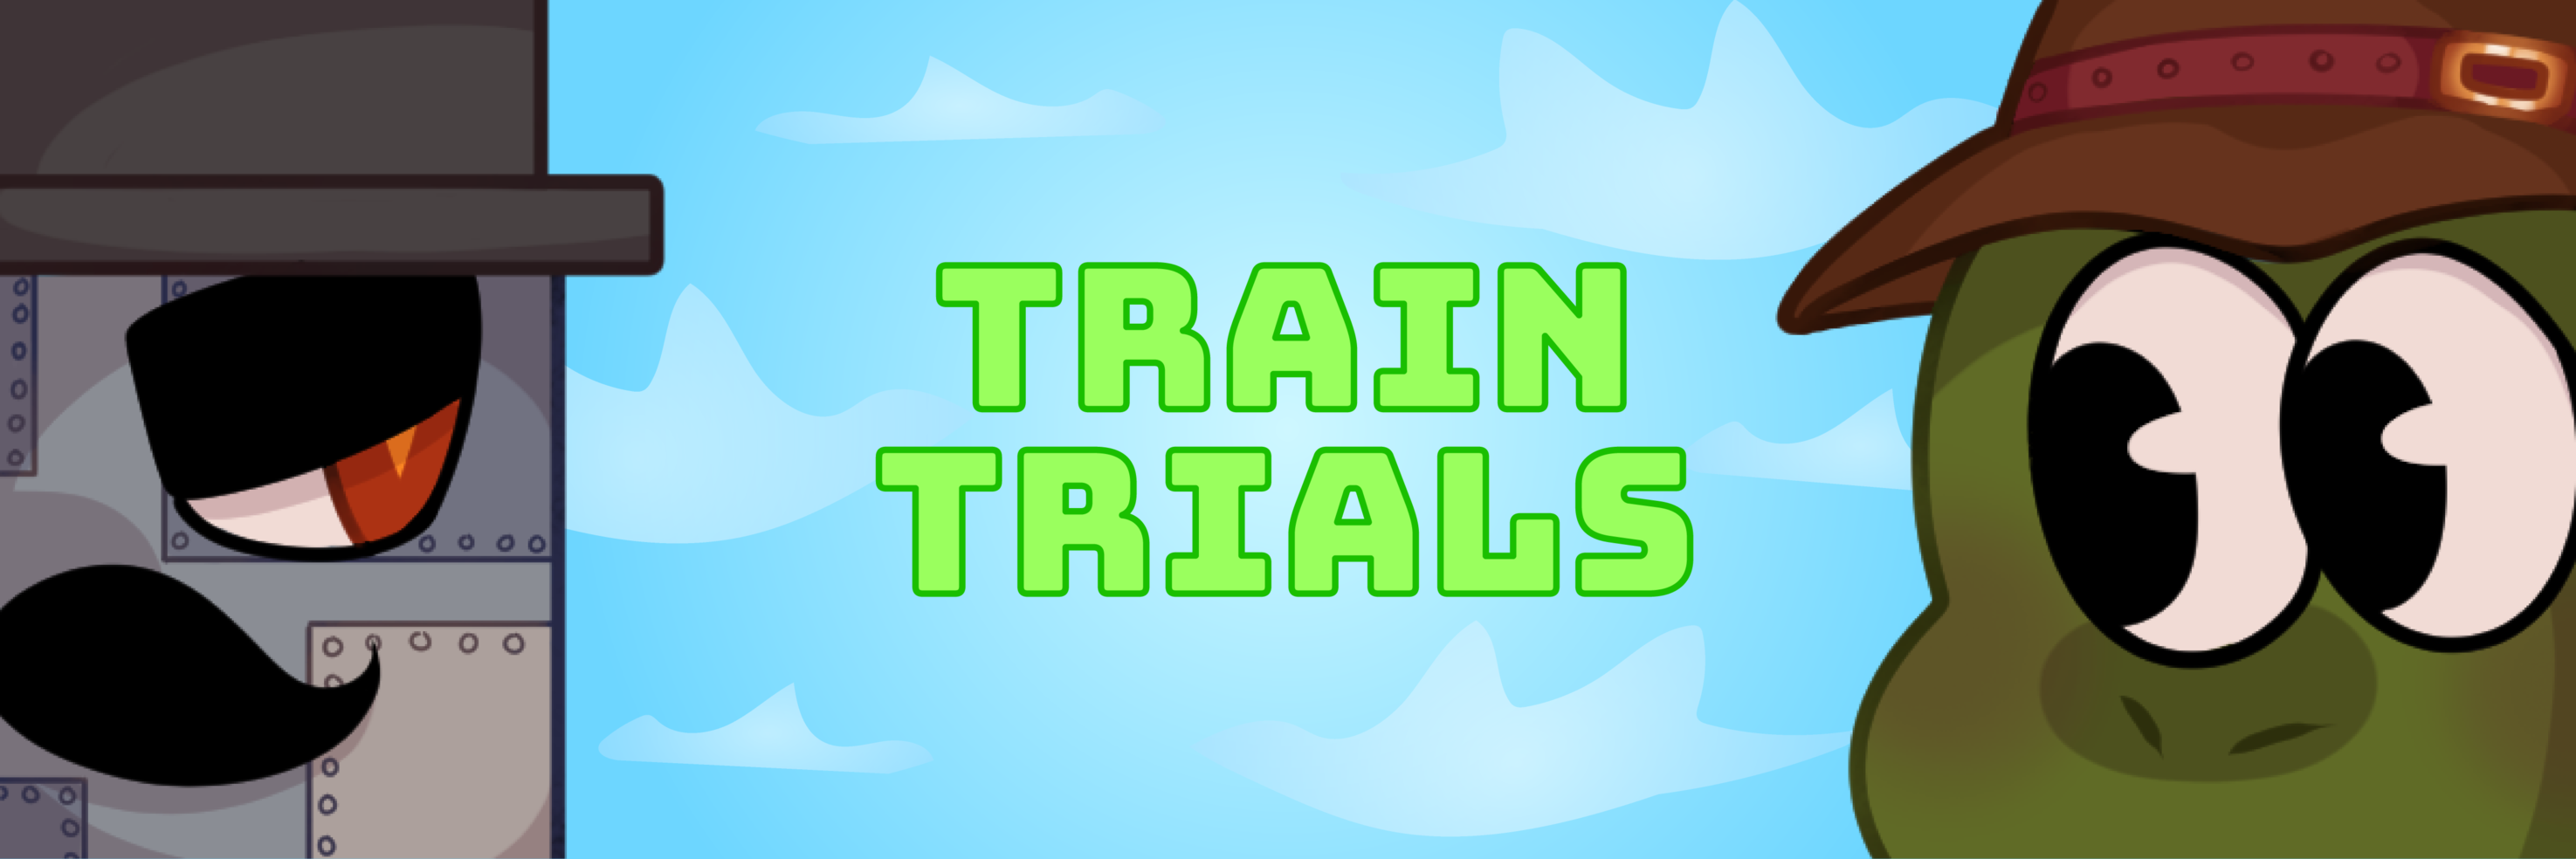 Train Trials